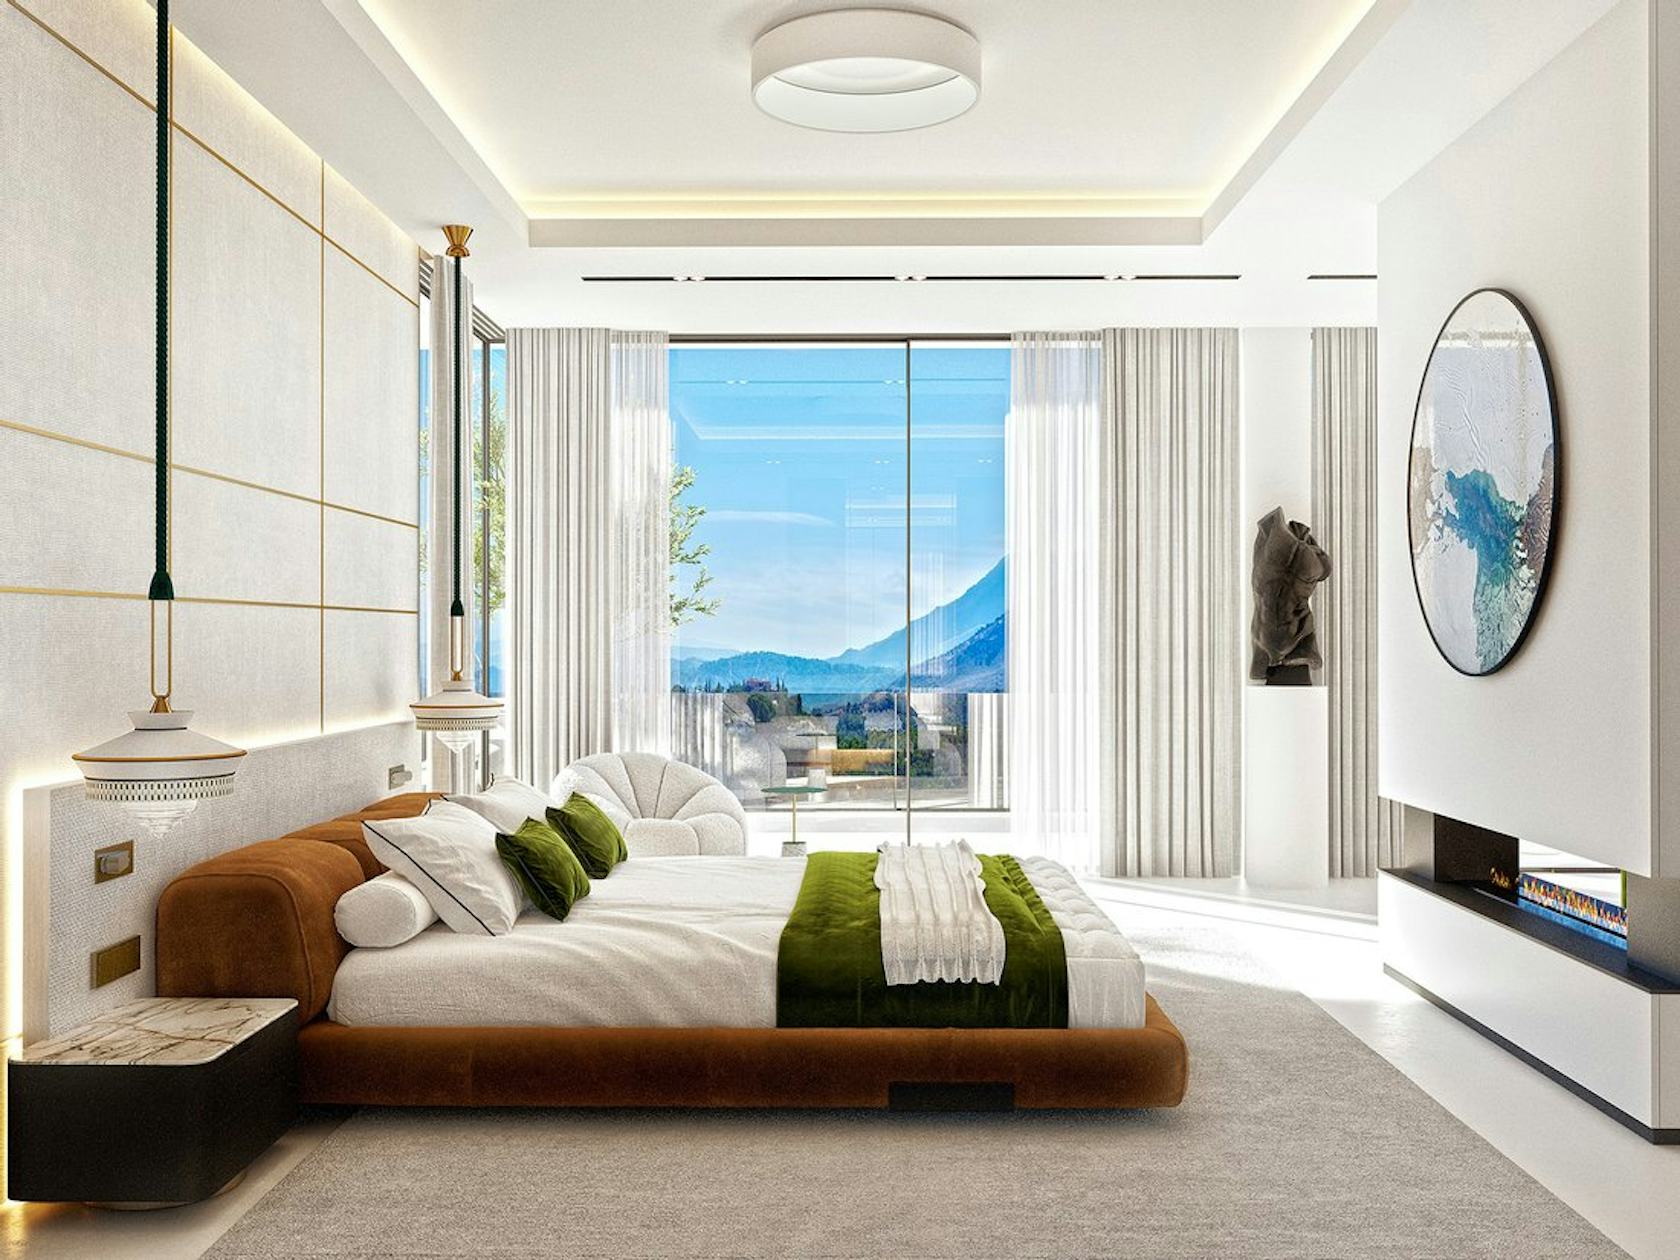 interior design indoors home decor bed furniture person bedroom room